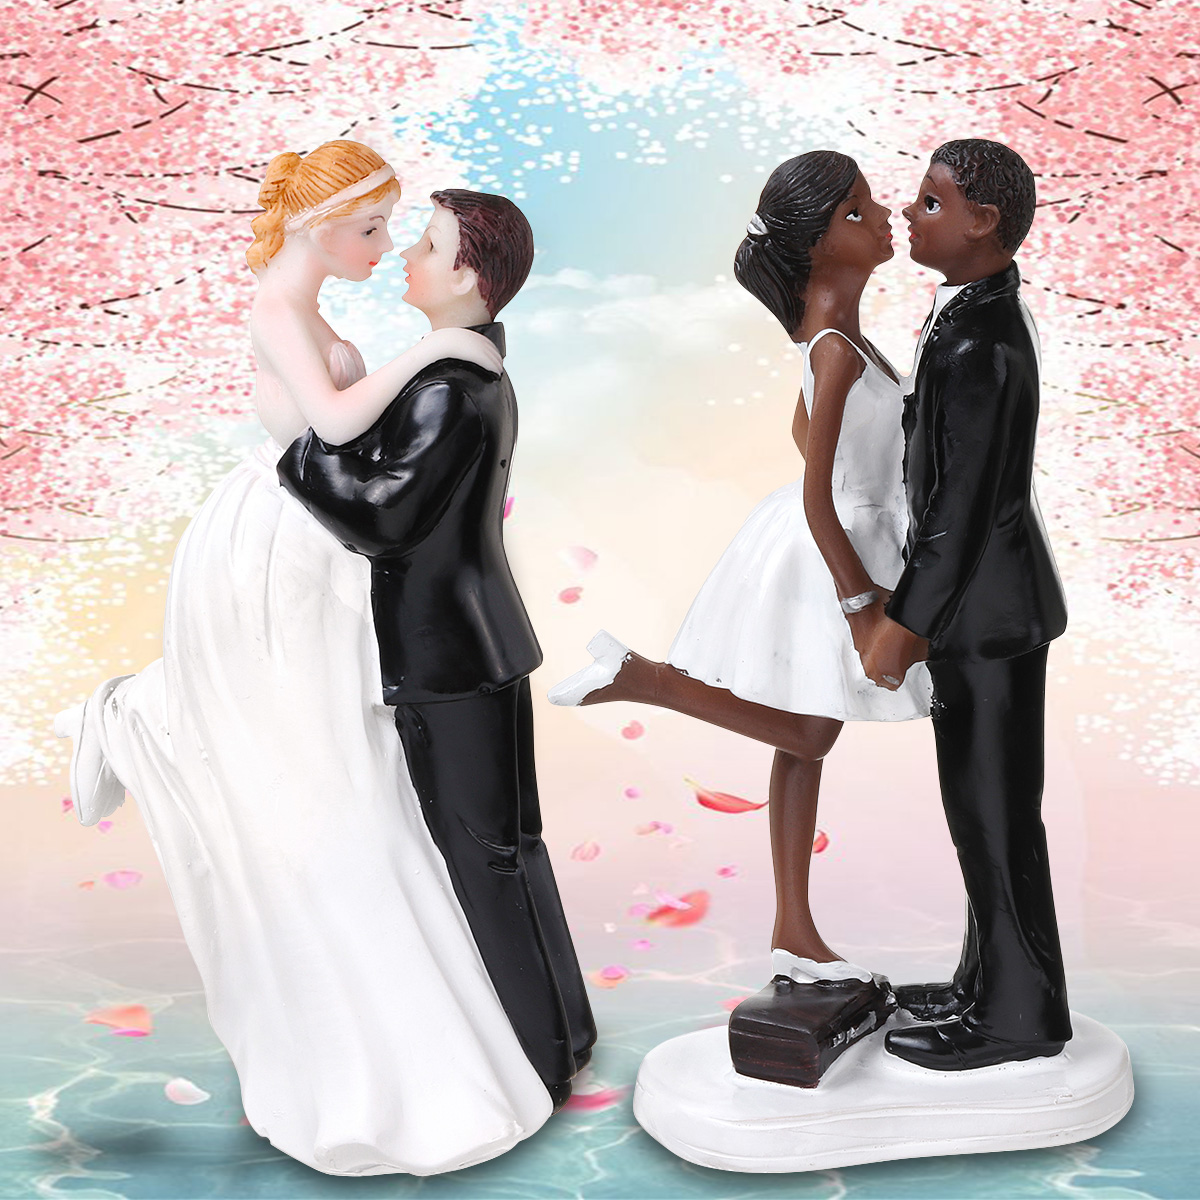 Romantic-Funny-Wedding-Cake-Topper-Figure-Bride-Groom-Couple-Bridal-Decorations-1421525-1